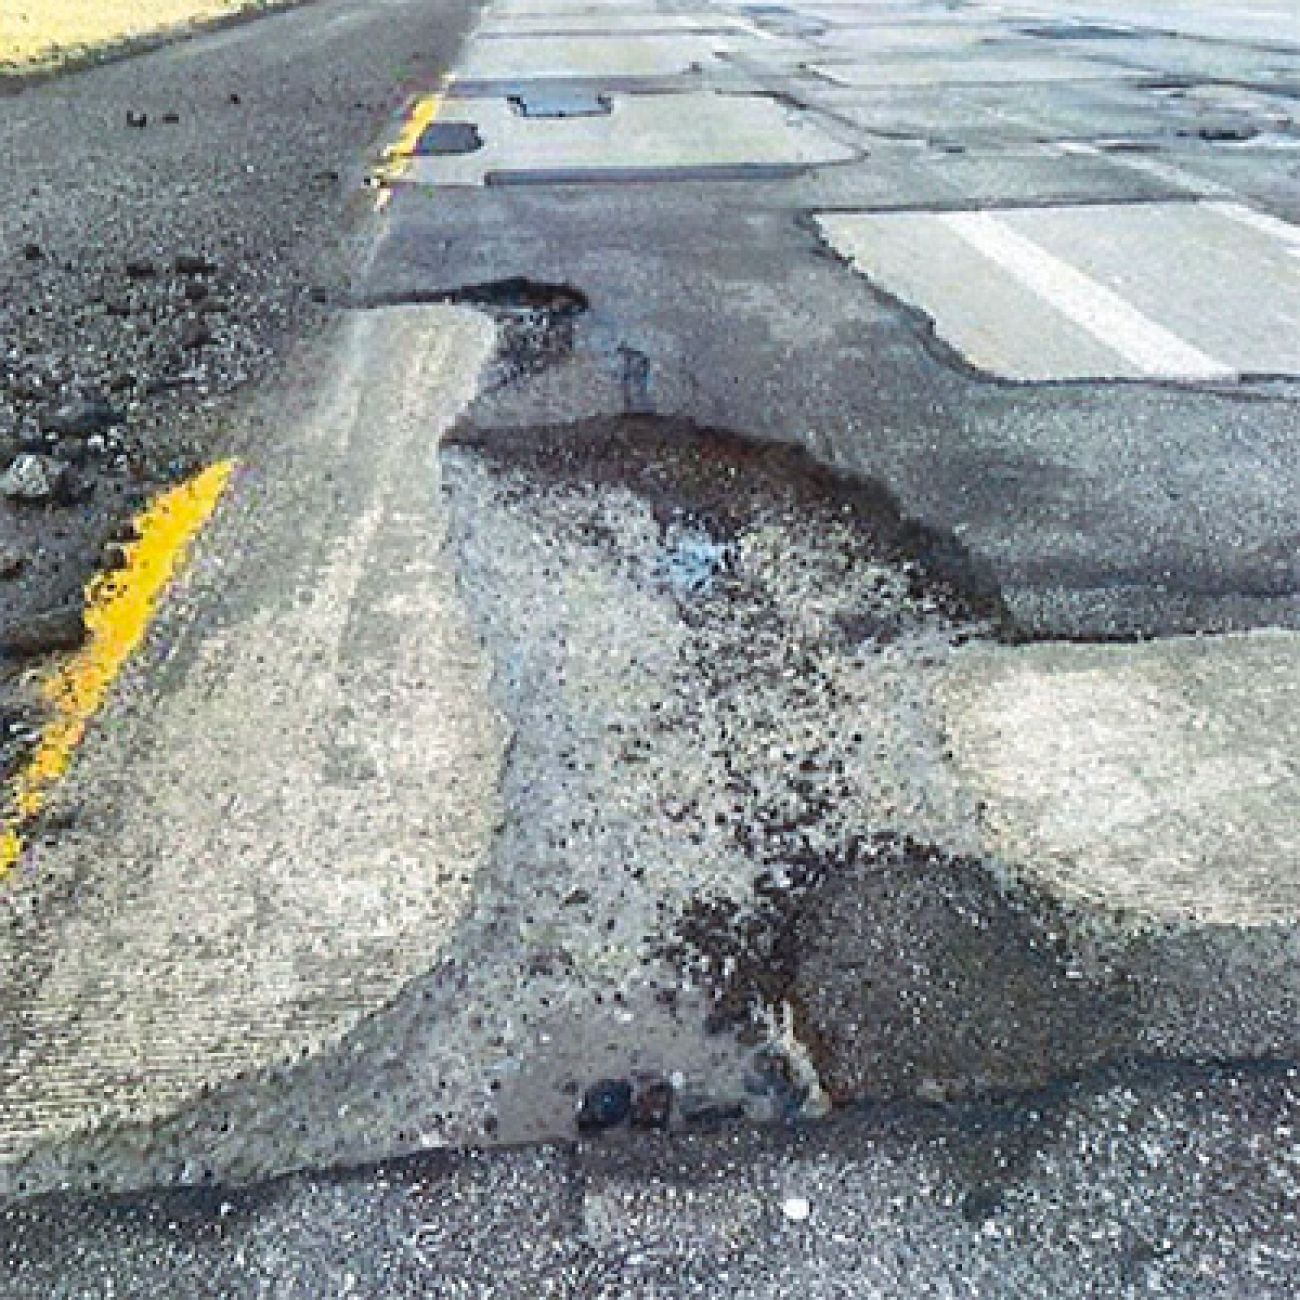 many potholes on a road